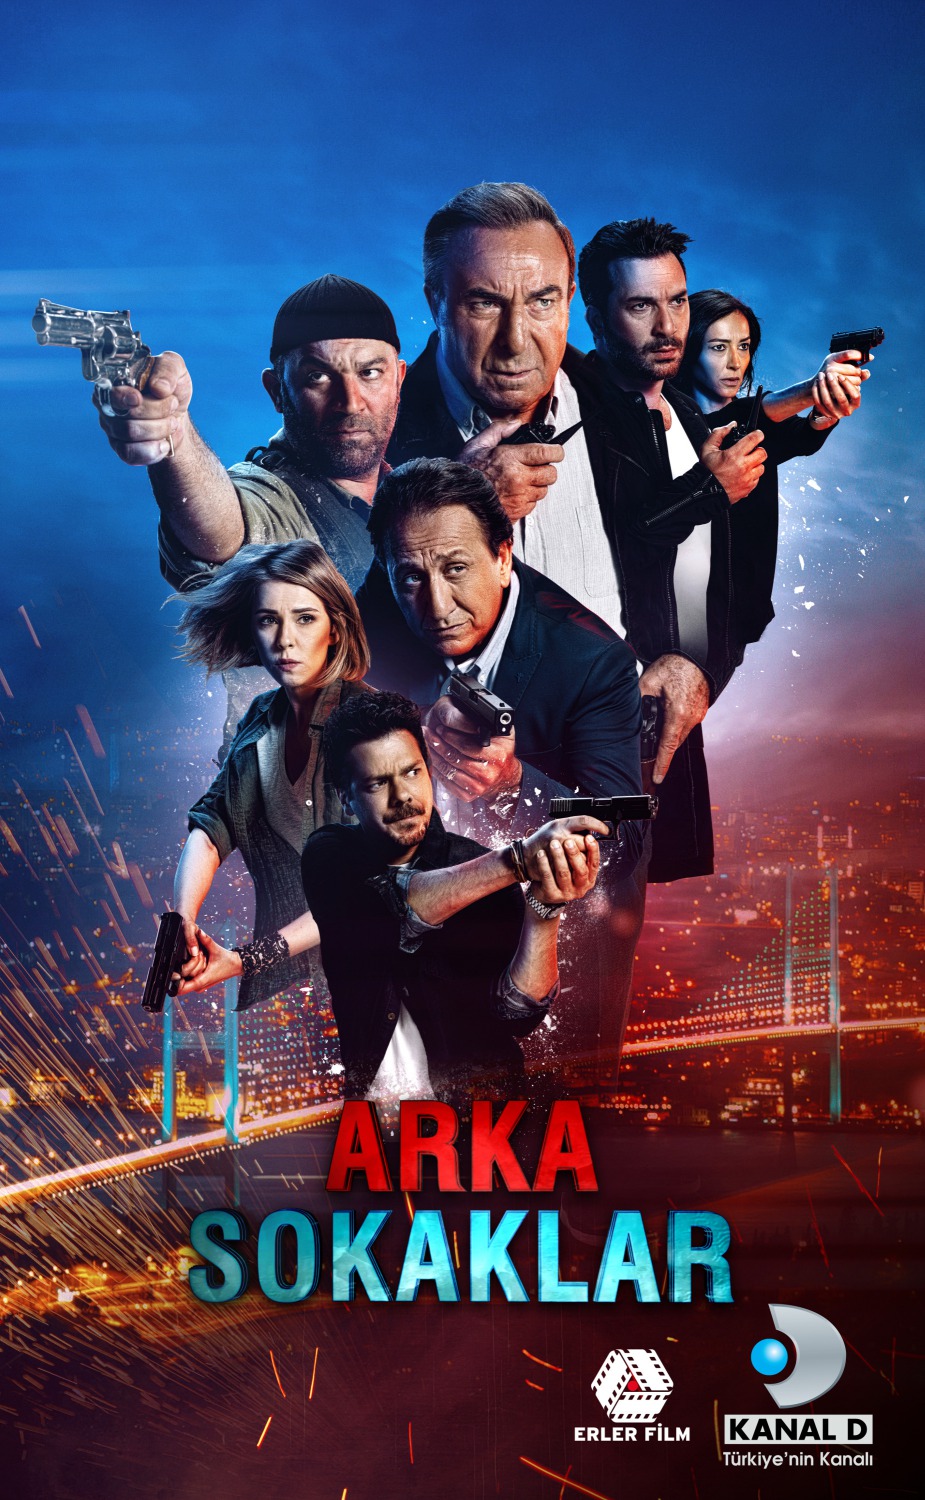 Extra Large TV Poster Image for Arka sokaklar (#1 of 11)